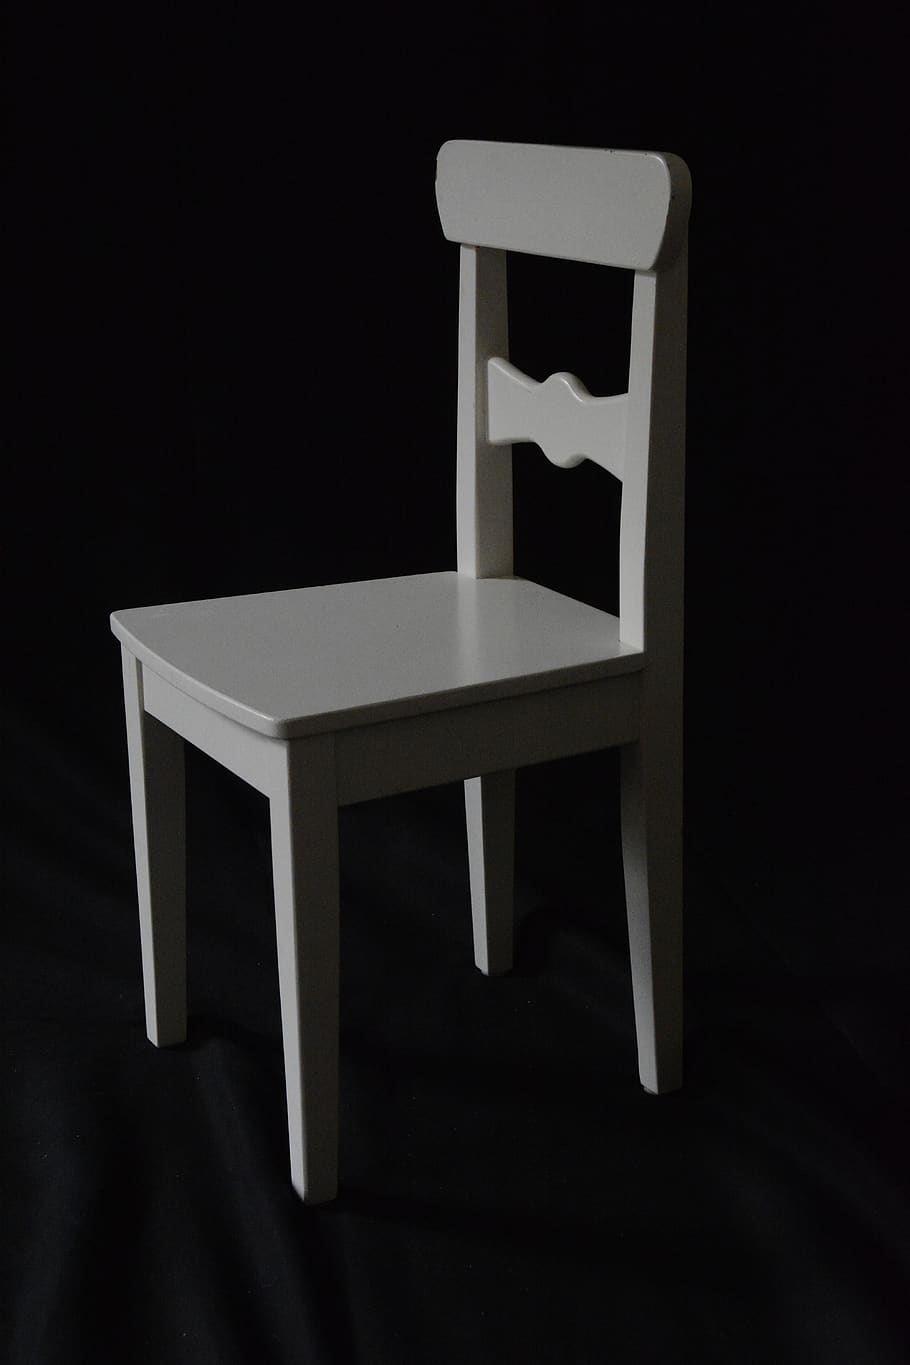 chair, black, white, sitting, ikea, aesthetic, nice, black background, indoors, seat